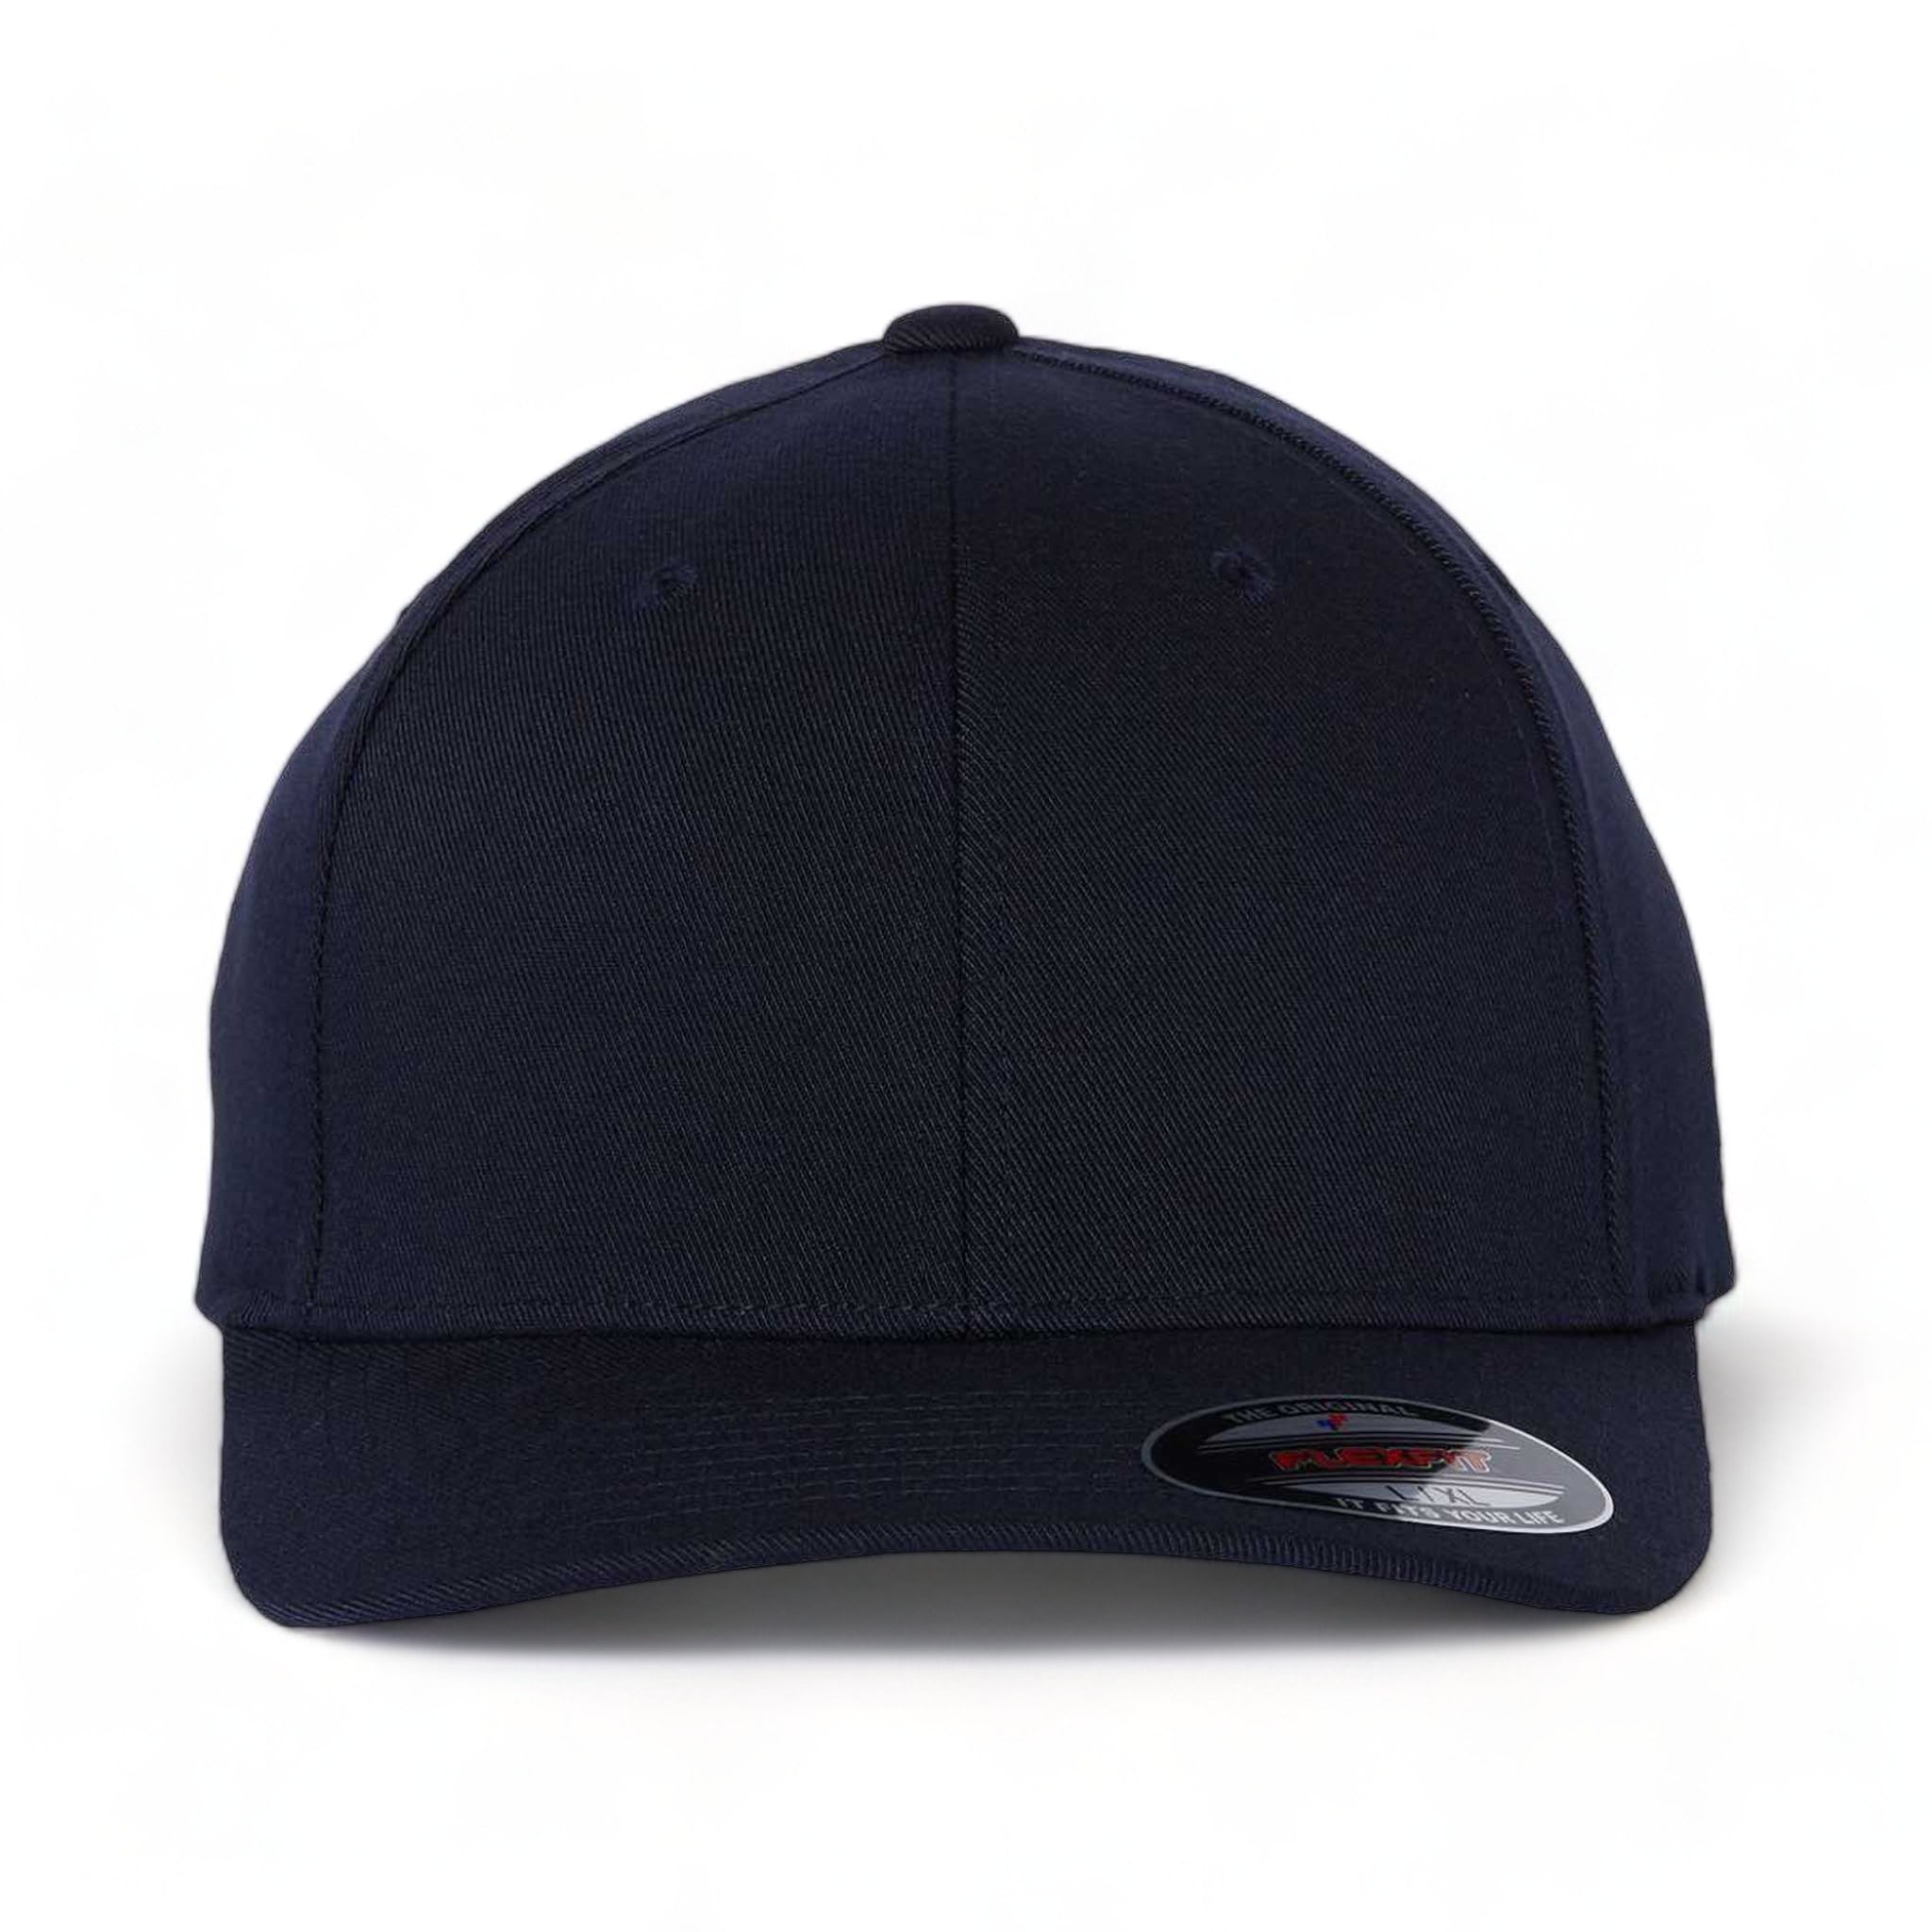 Front view of Flexfit 6580 custom hat in dark navy